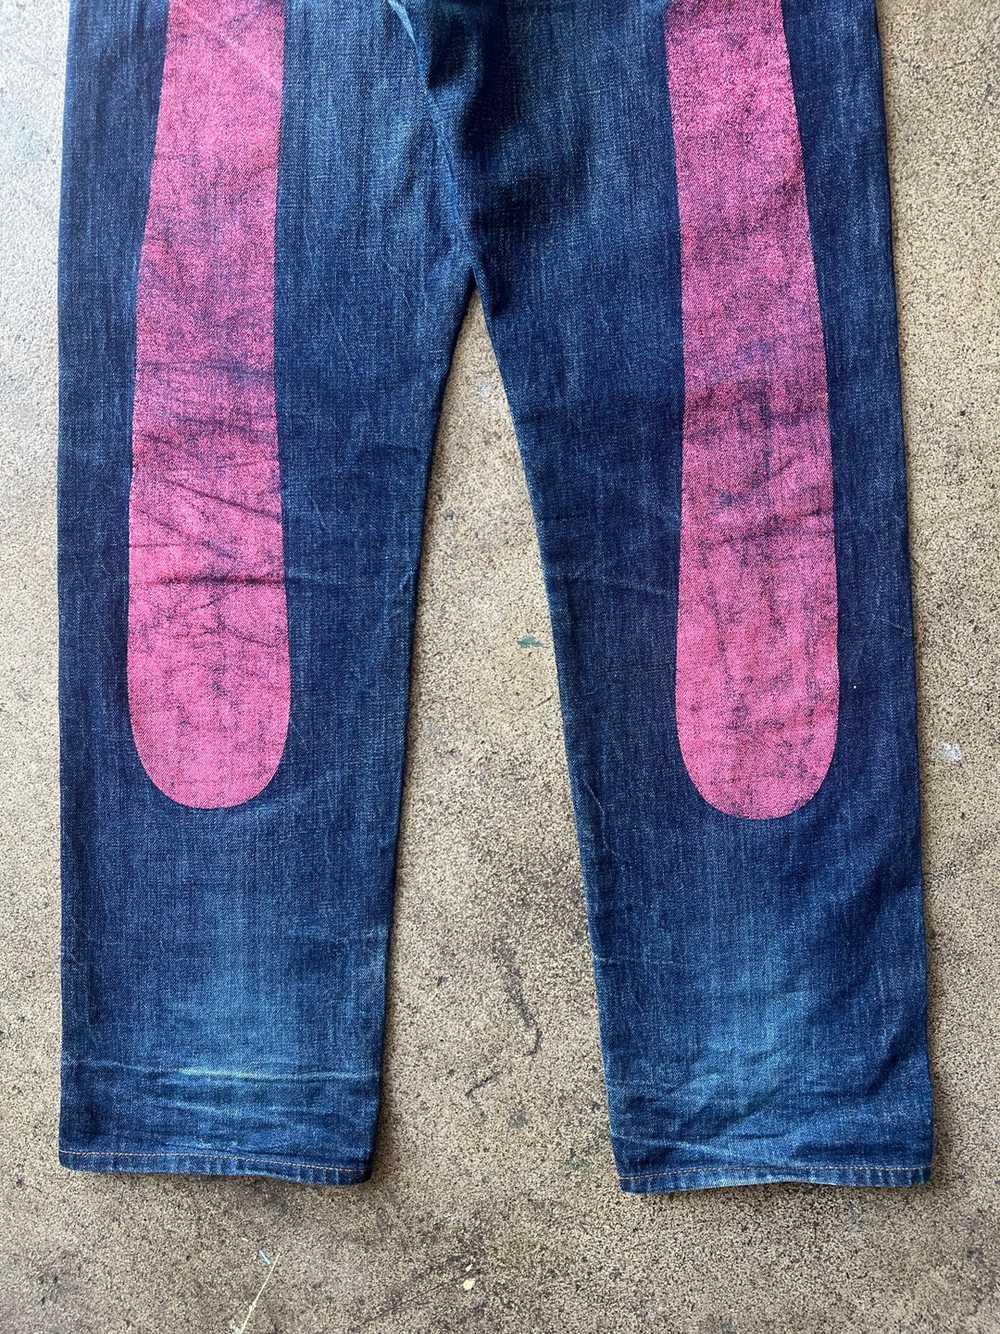 2000s Evisu Daicock Selvedge Jeans 33" x 32" - image 3